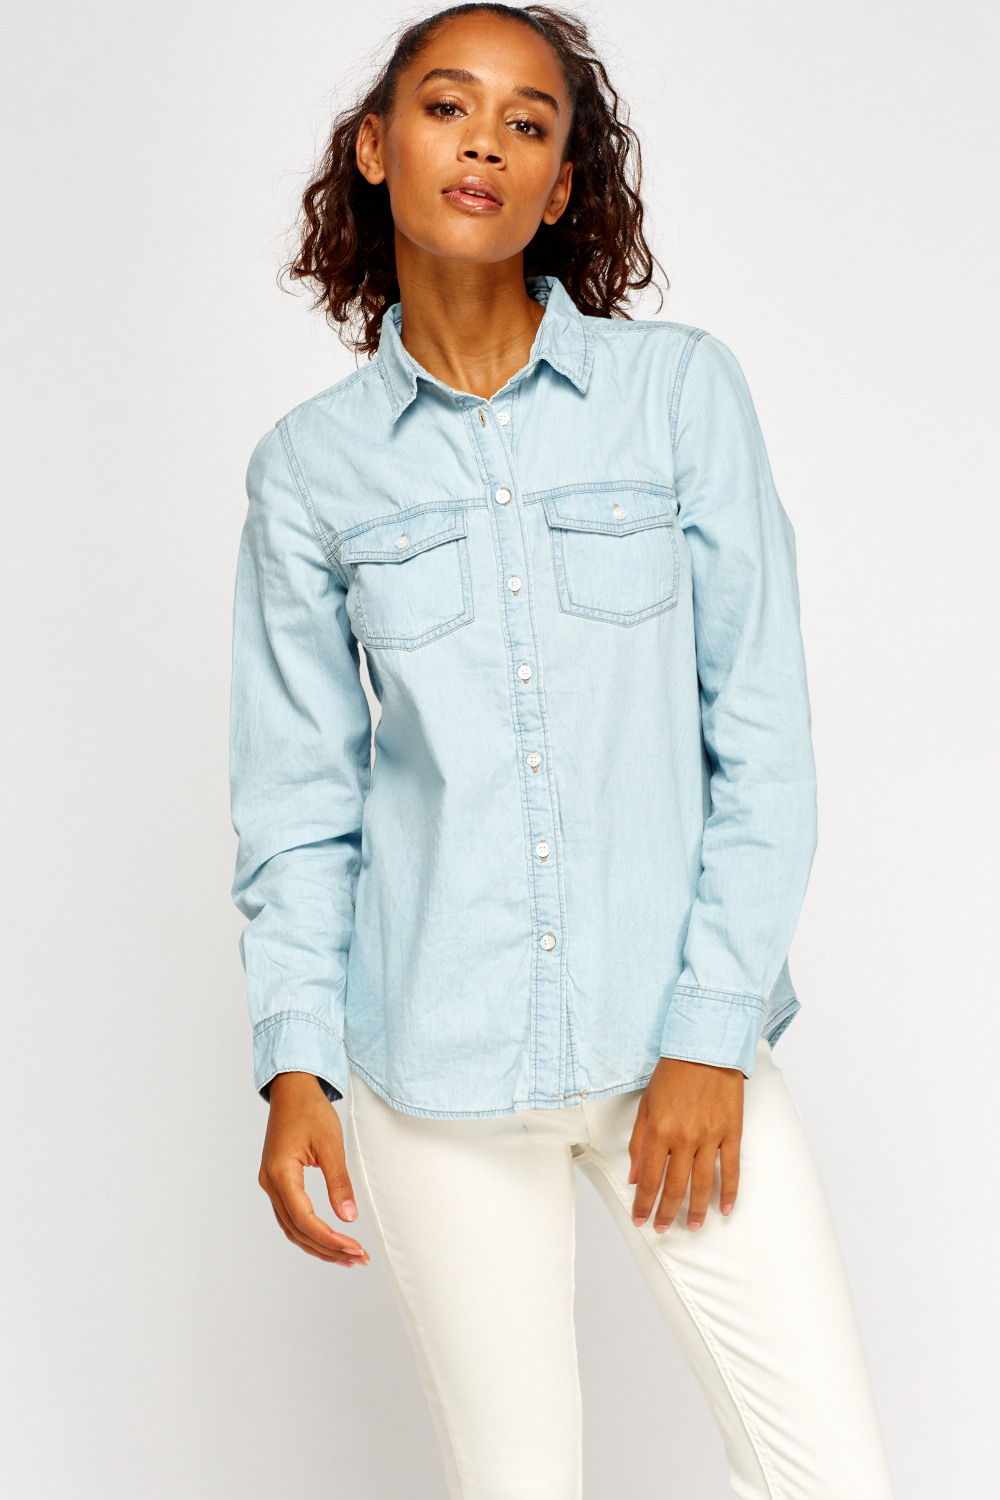 Light Blue Denim Shirts - Just $7